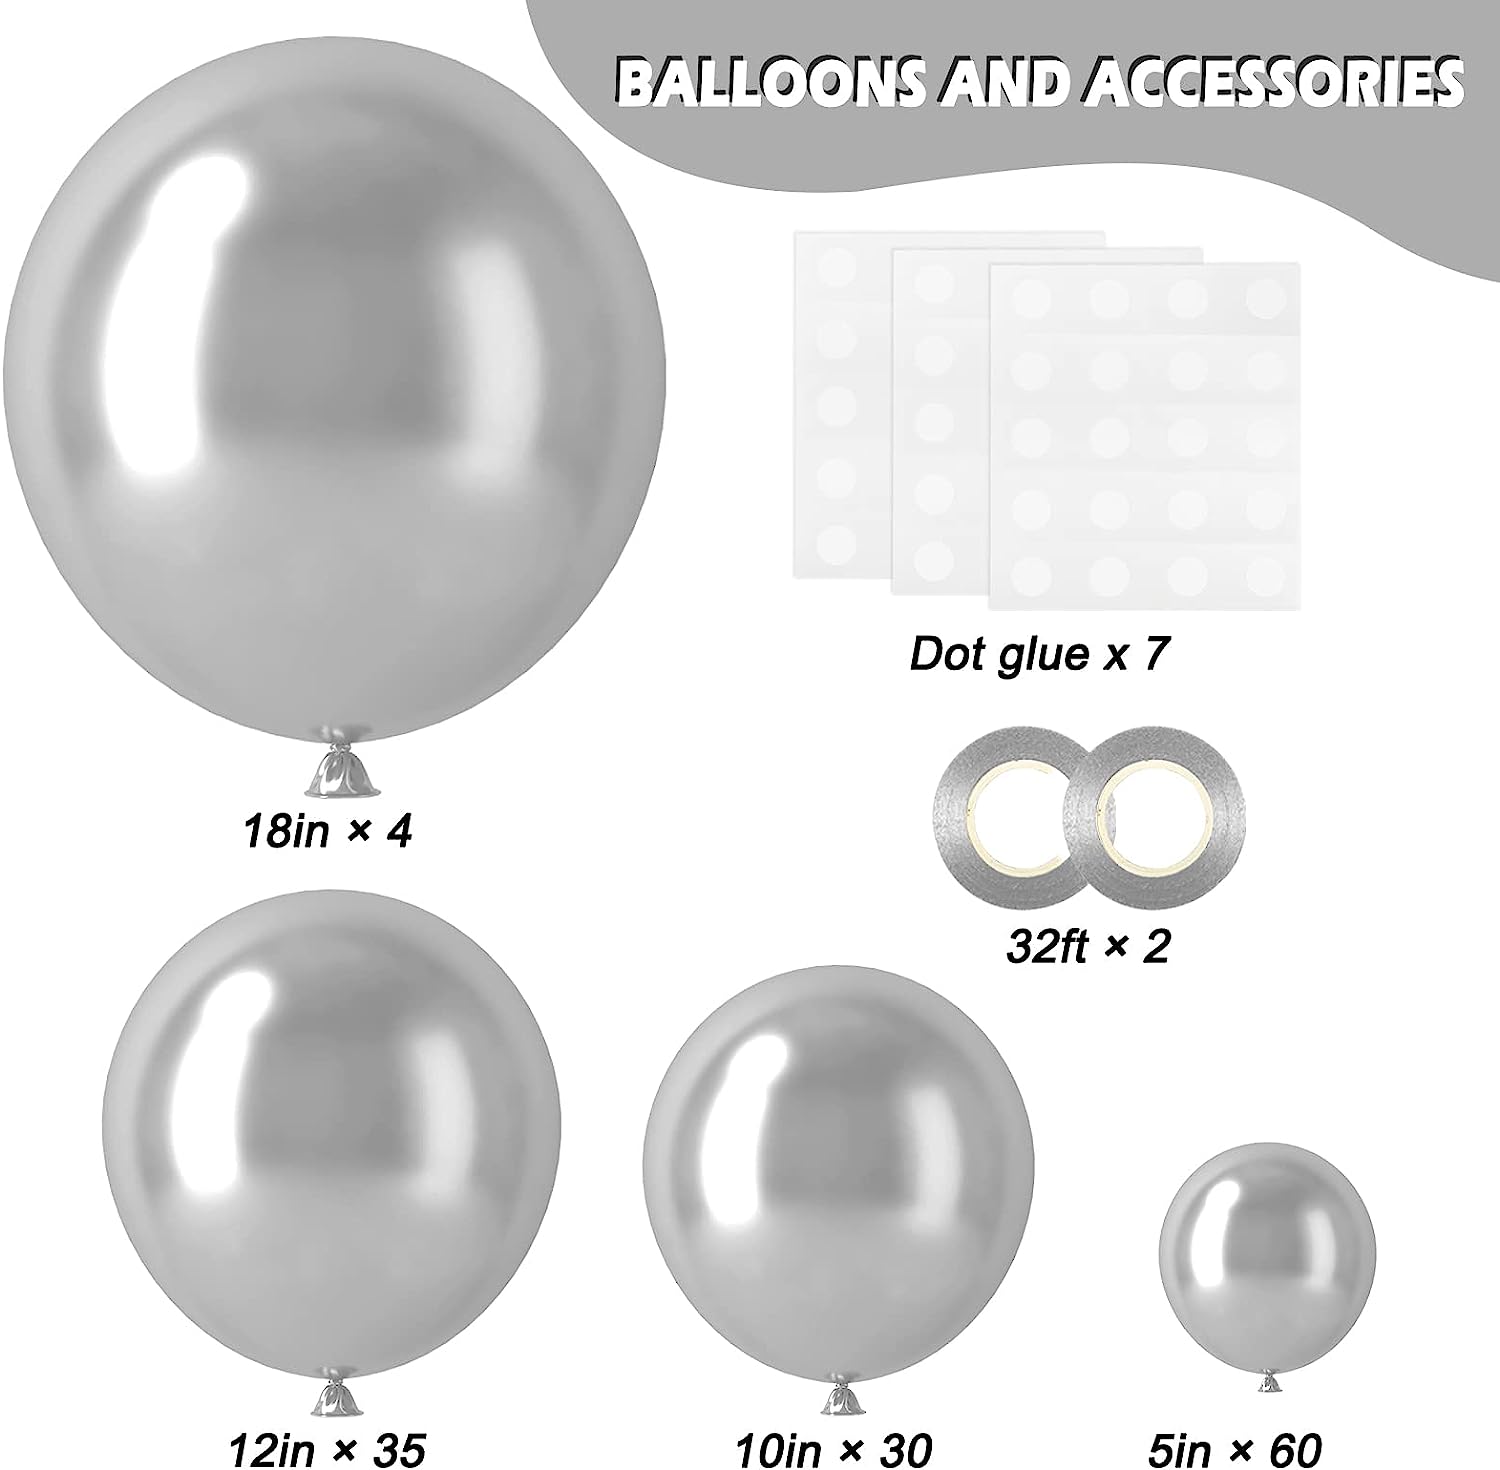 X018: 129pcs Metallic Silver  Balloons for Happy Birthday Wedding Anniversary Valentine&